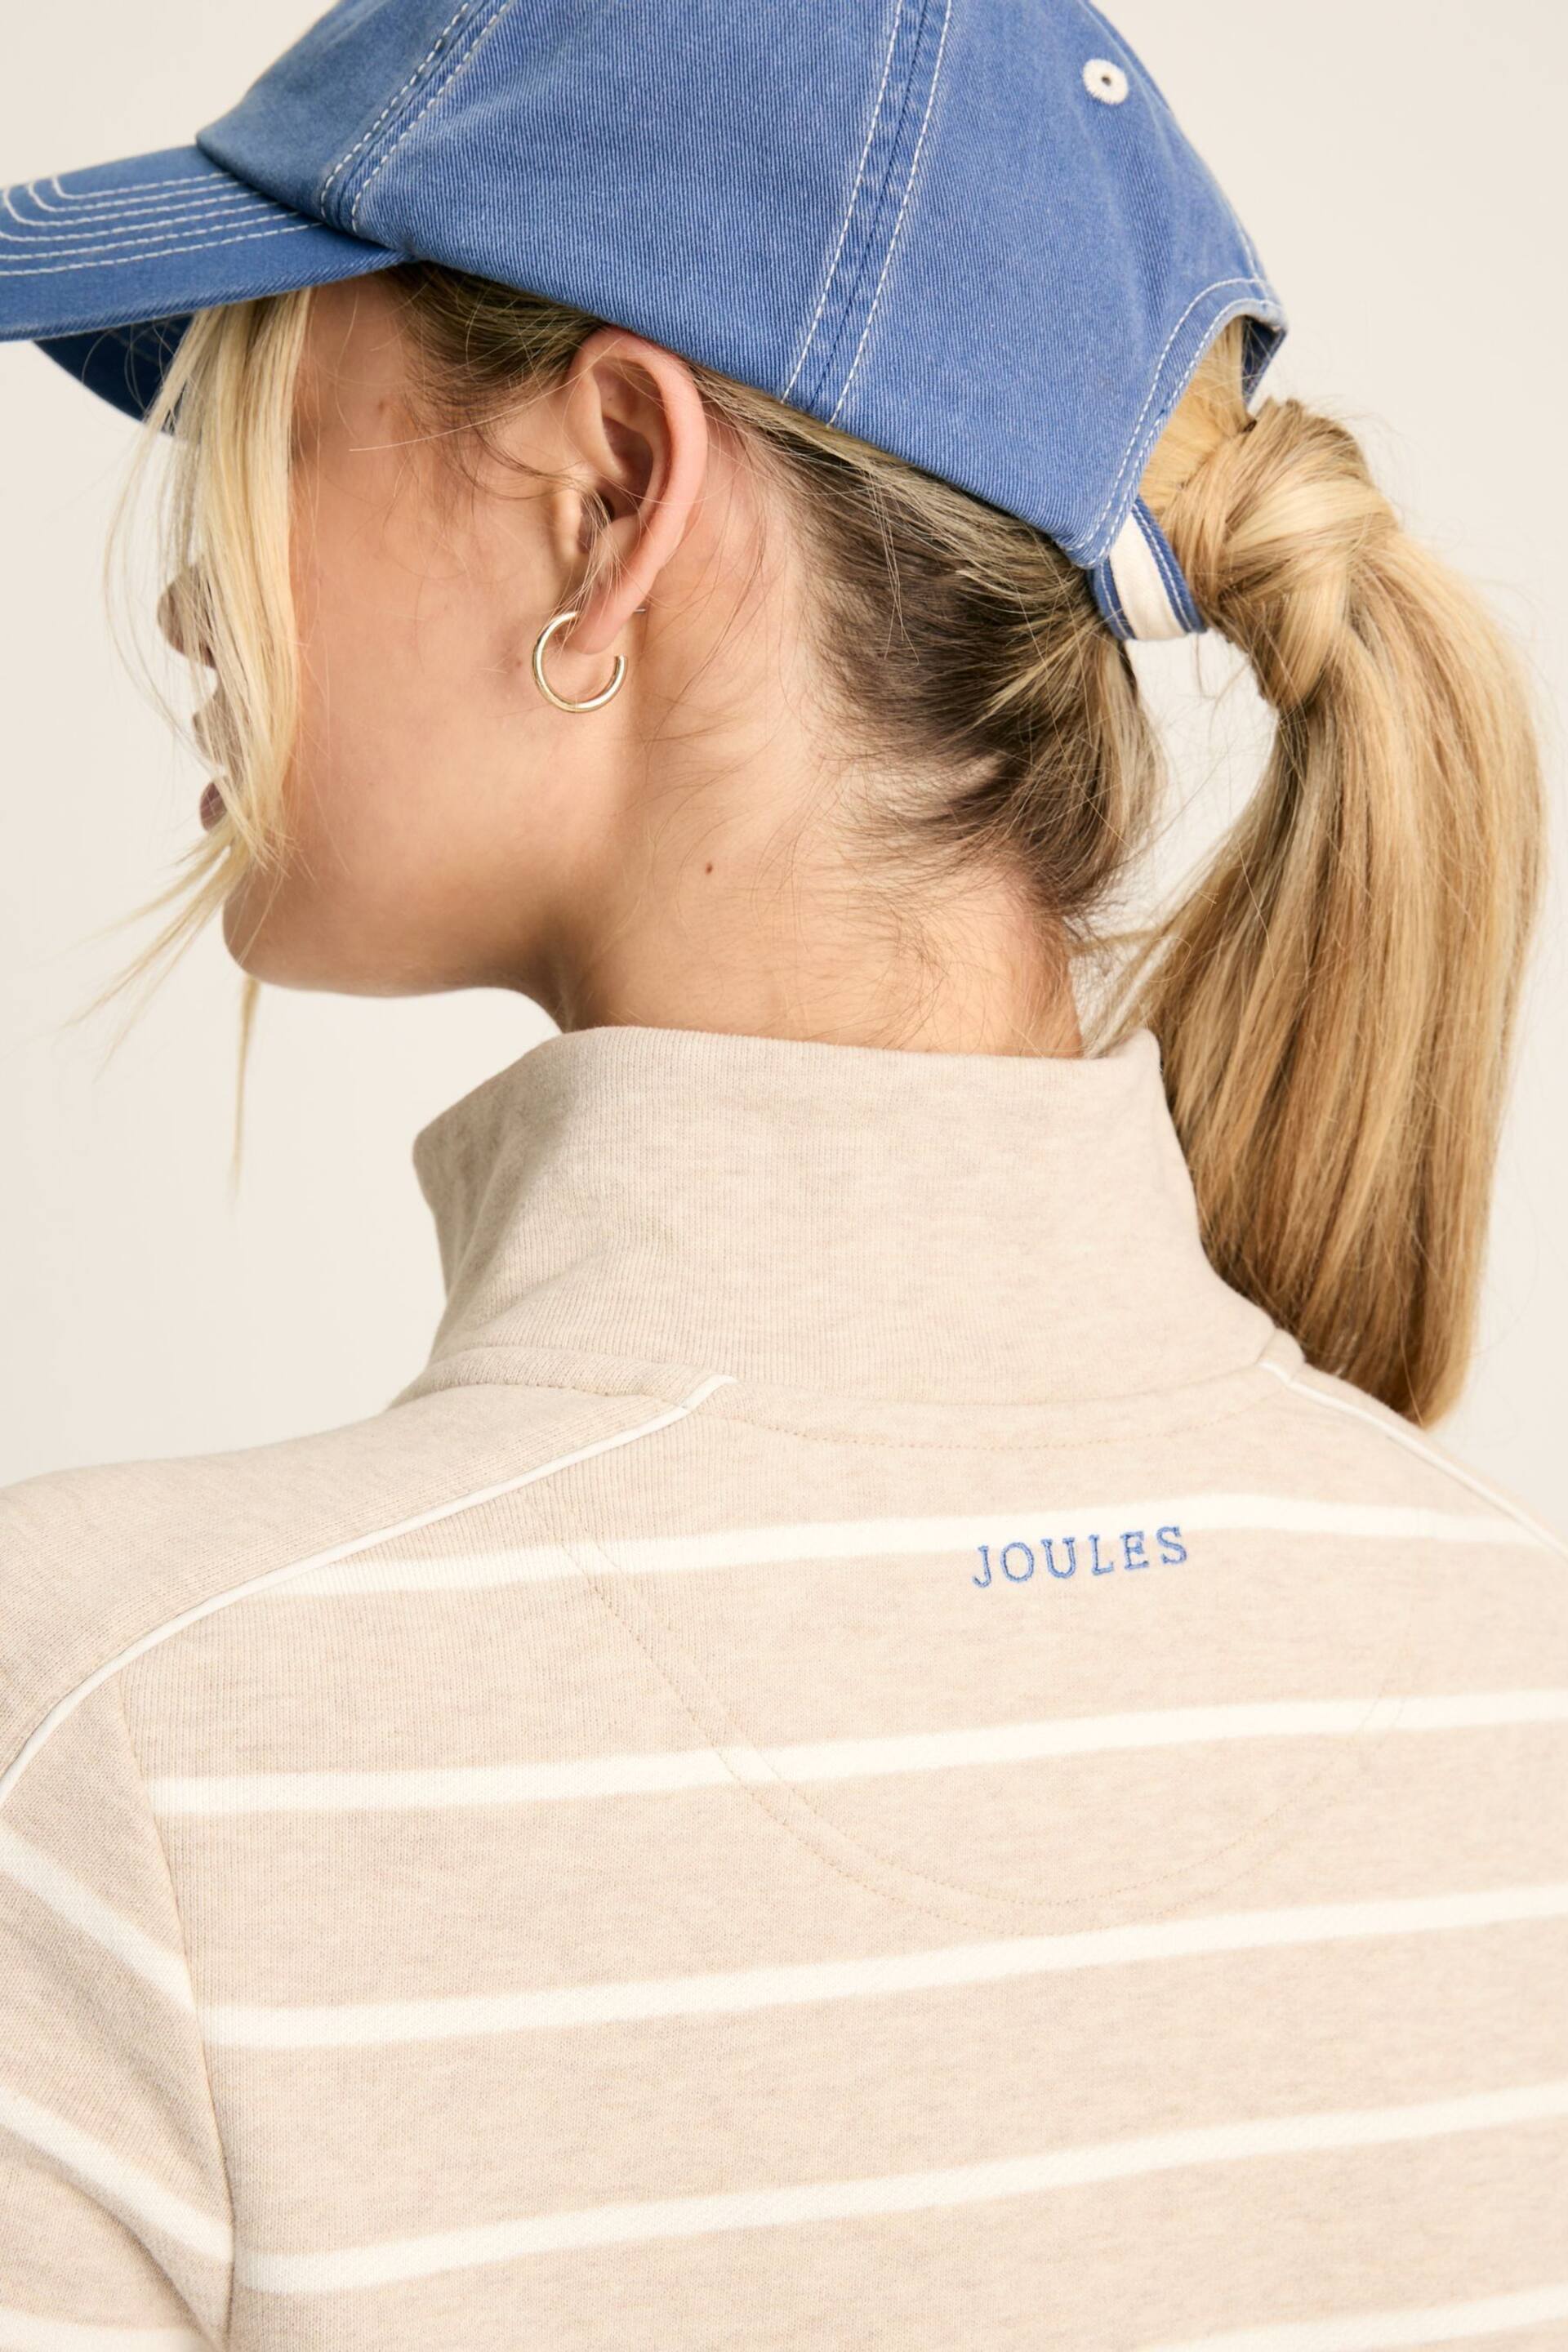 Joules Southwold Oatmarl Button Down Striped Sweatshirt - Image 7 of 8